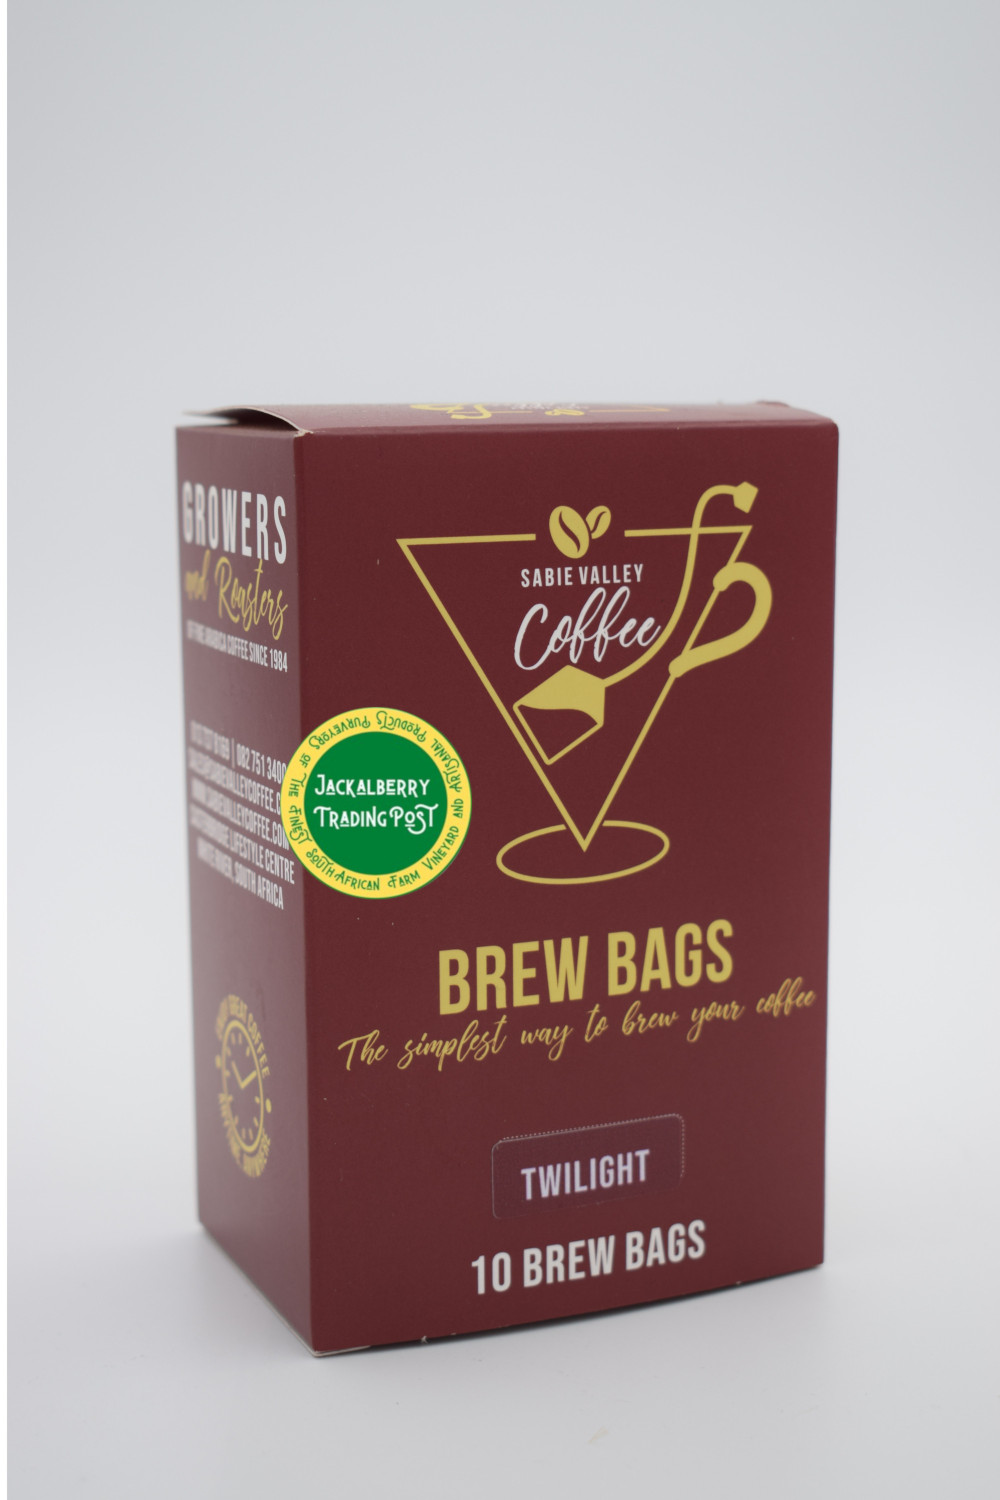 Sabie Valley Coffee 10 Brew Bags Twilight